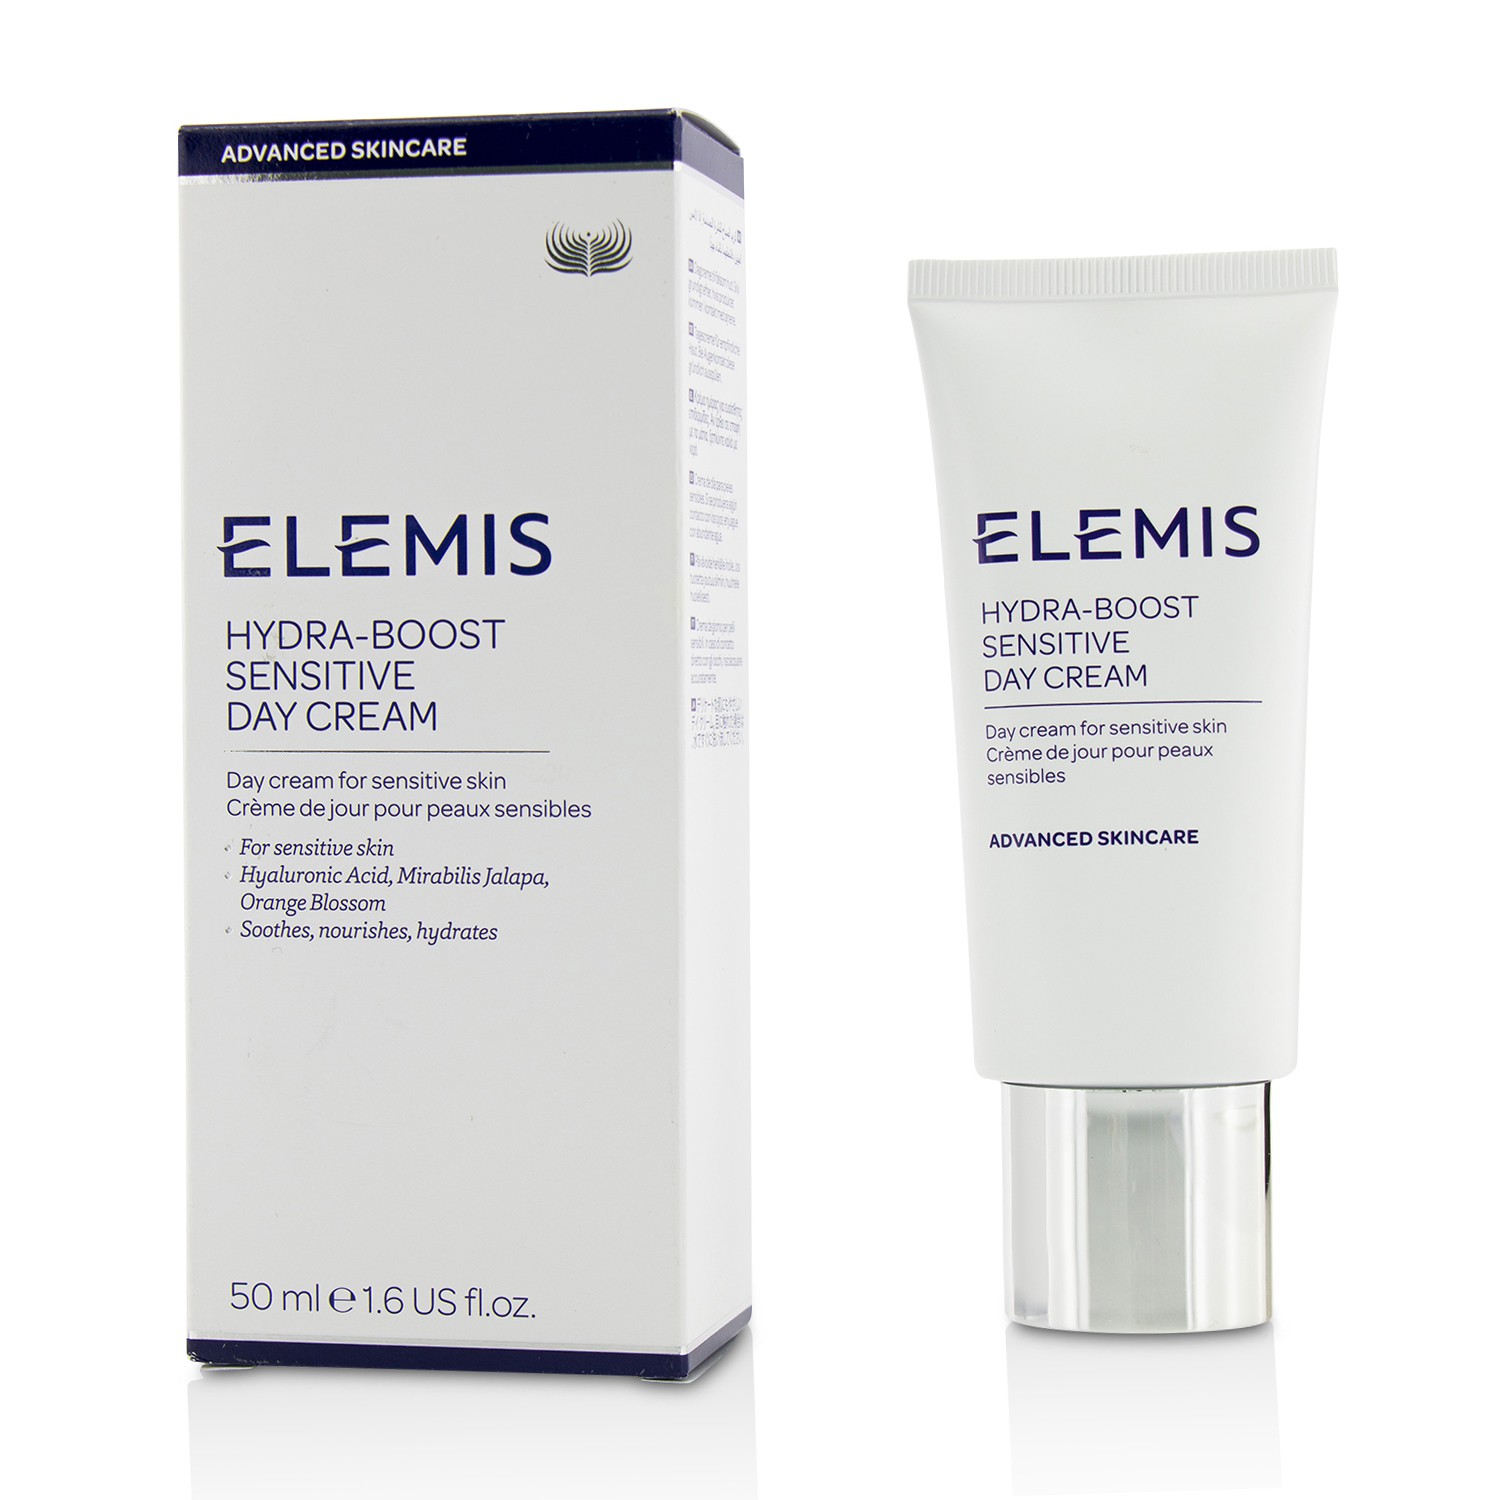 Hydra-Boost Sensitive Day Cream- for sensitive skin Elemis Image